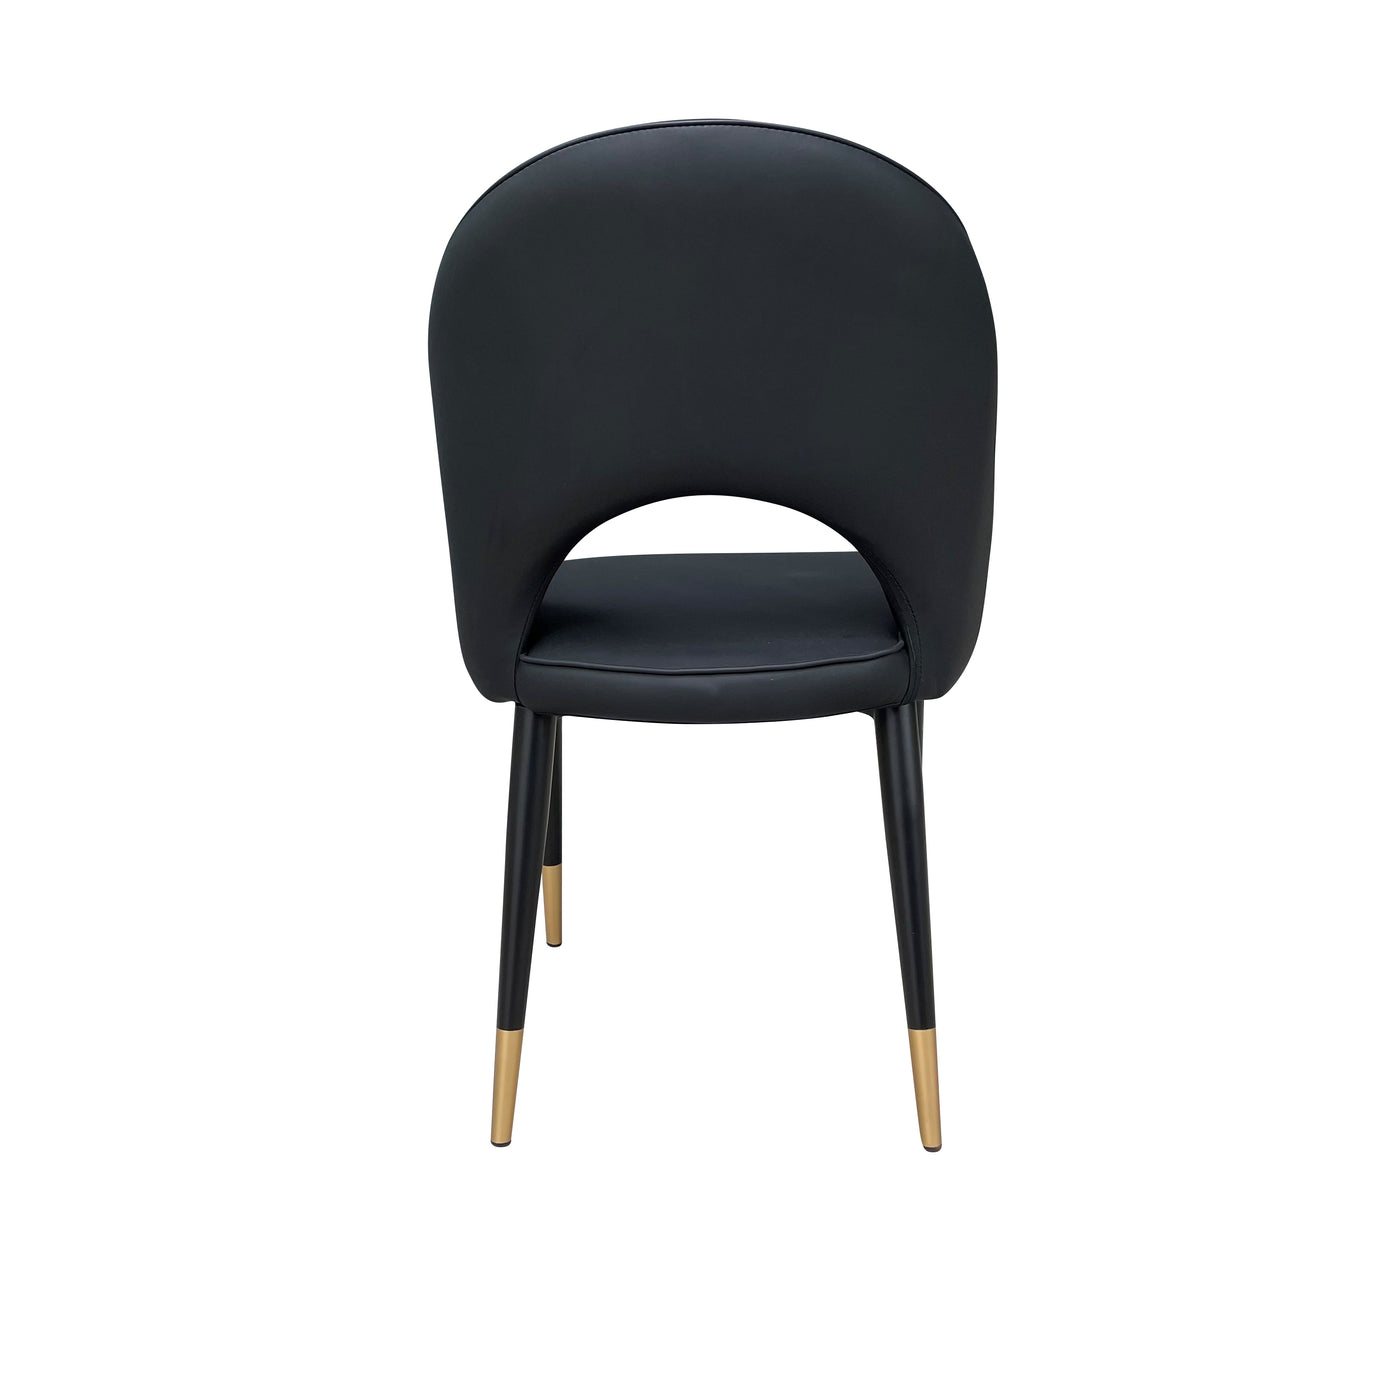 Bourdain Dining Chair Black Leather Look - Future Classics Furniture